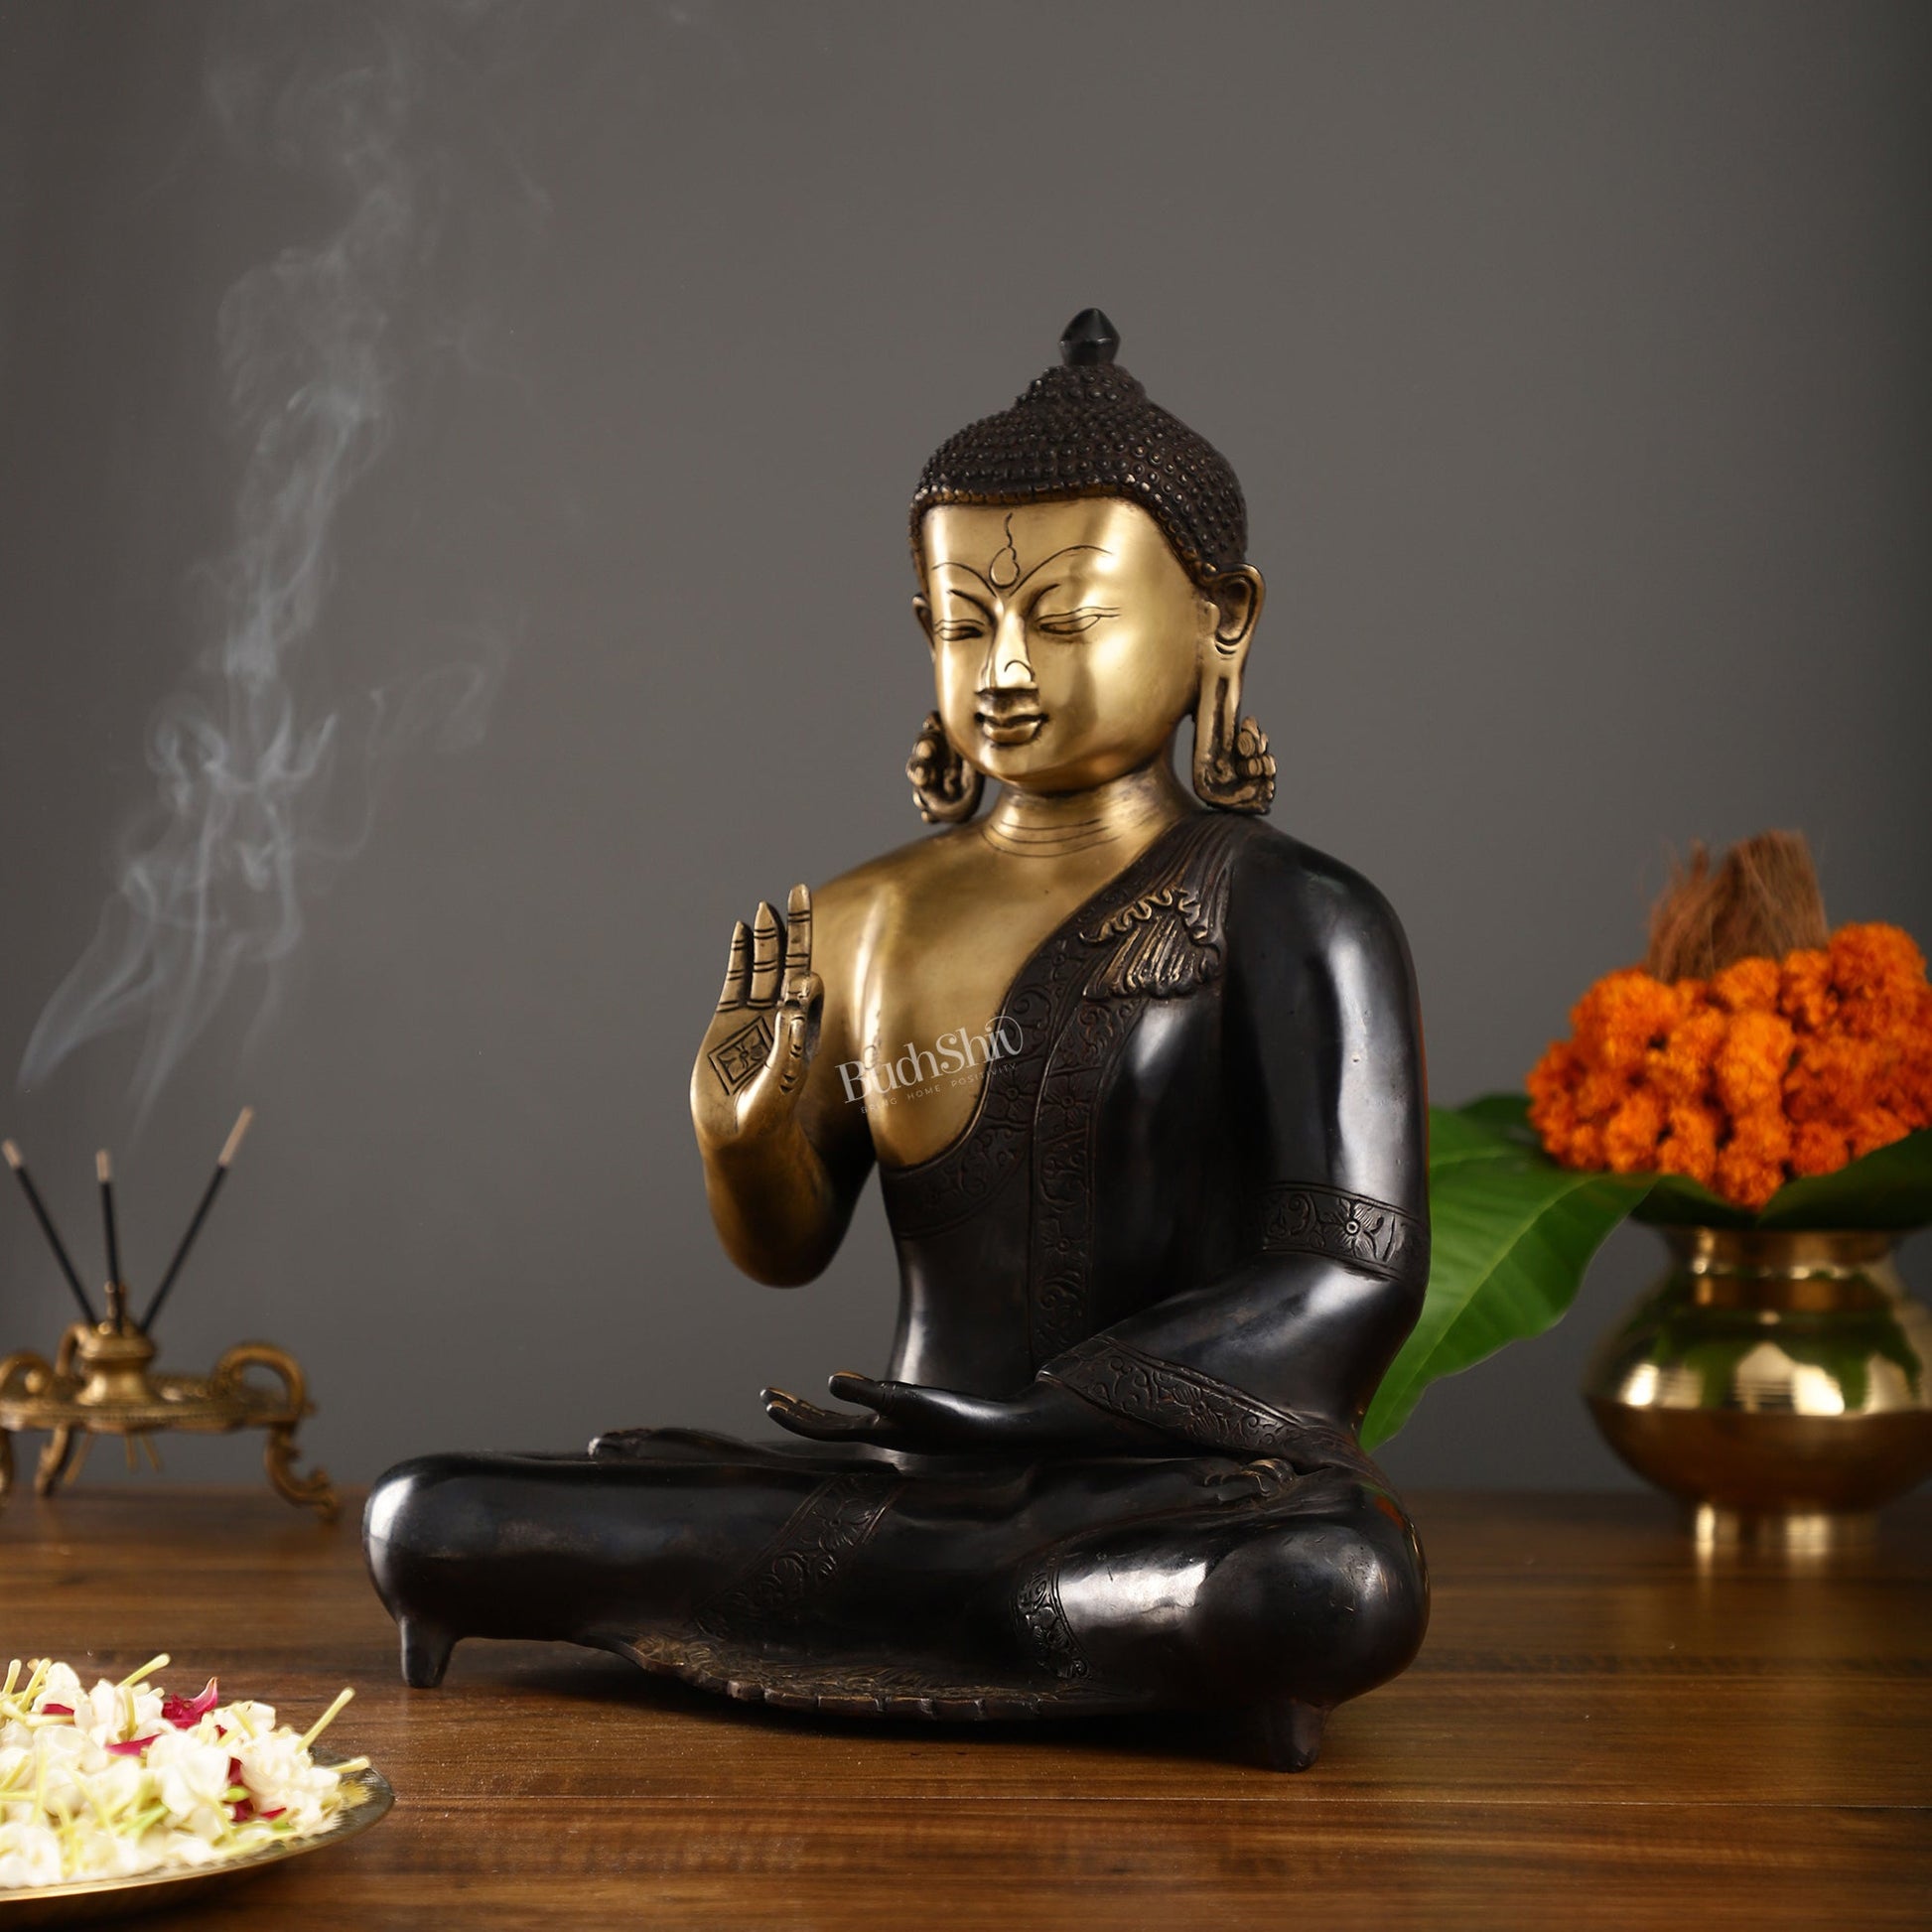 Brass Blessing Buddha idol 15" - Budhshiv.com